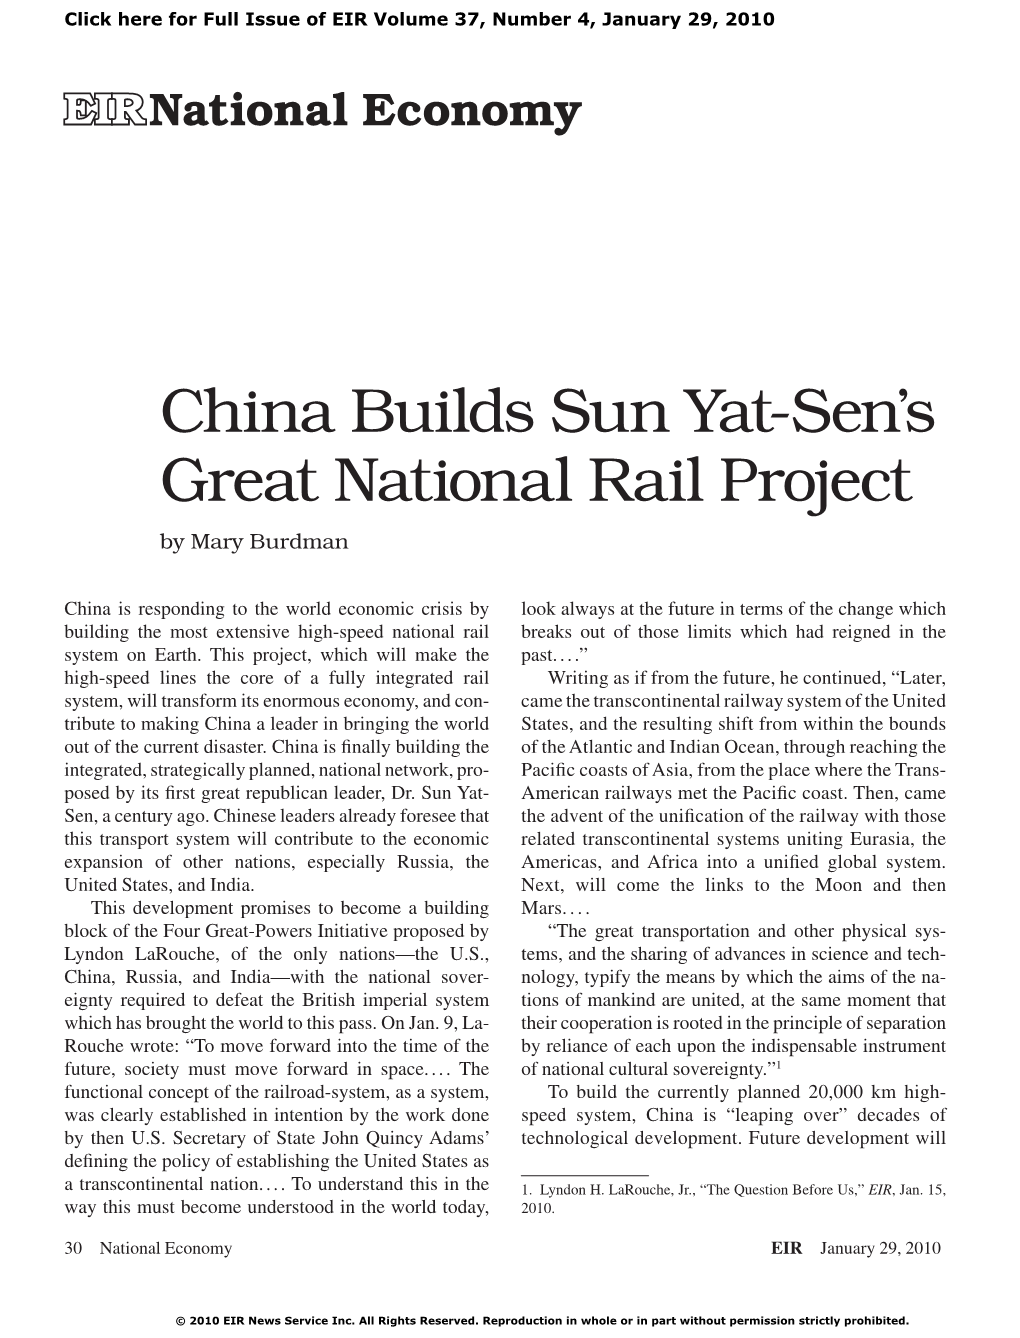 China Builds Sun Yat-Sen's Great National Rail Project